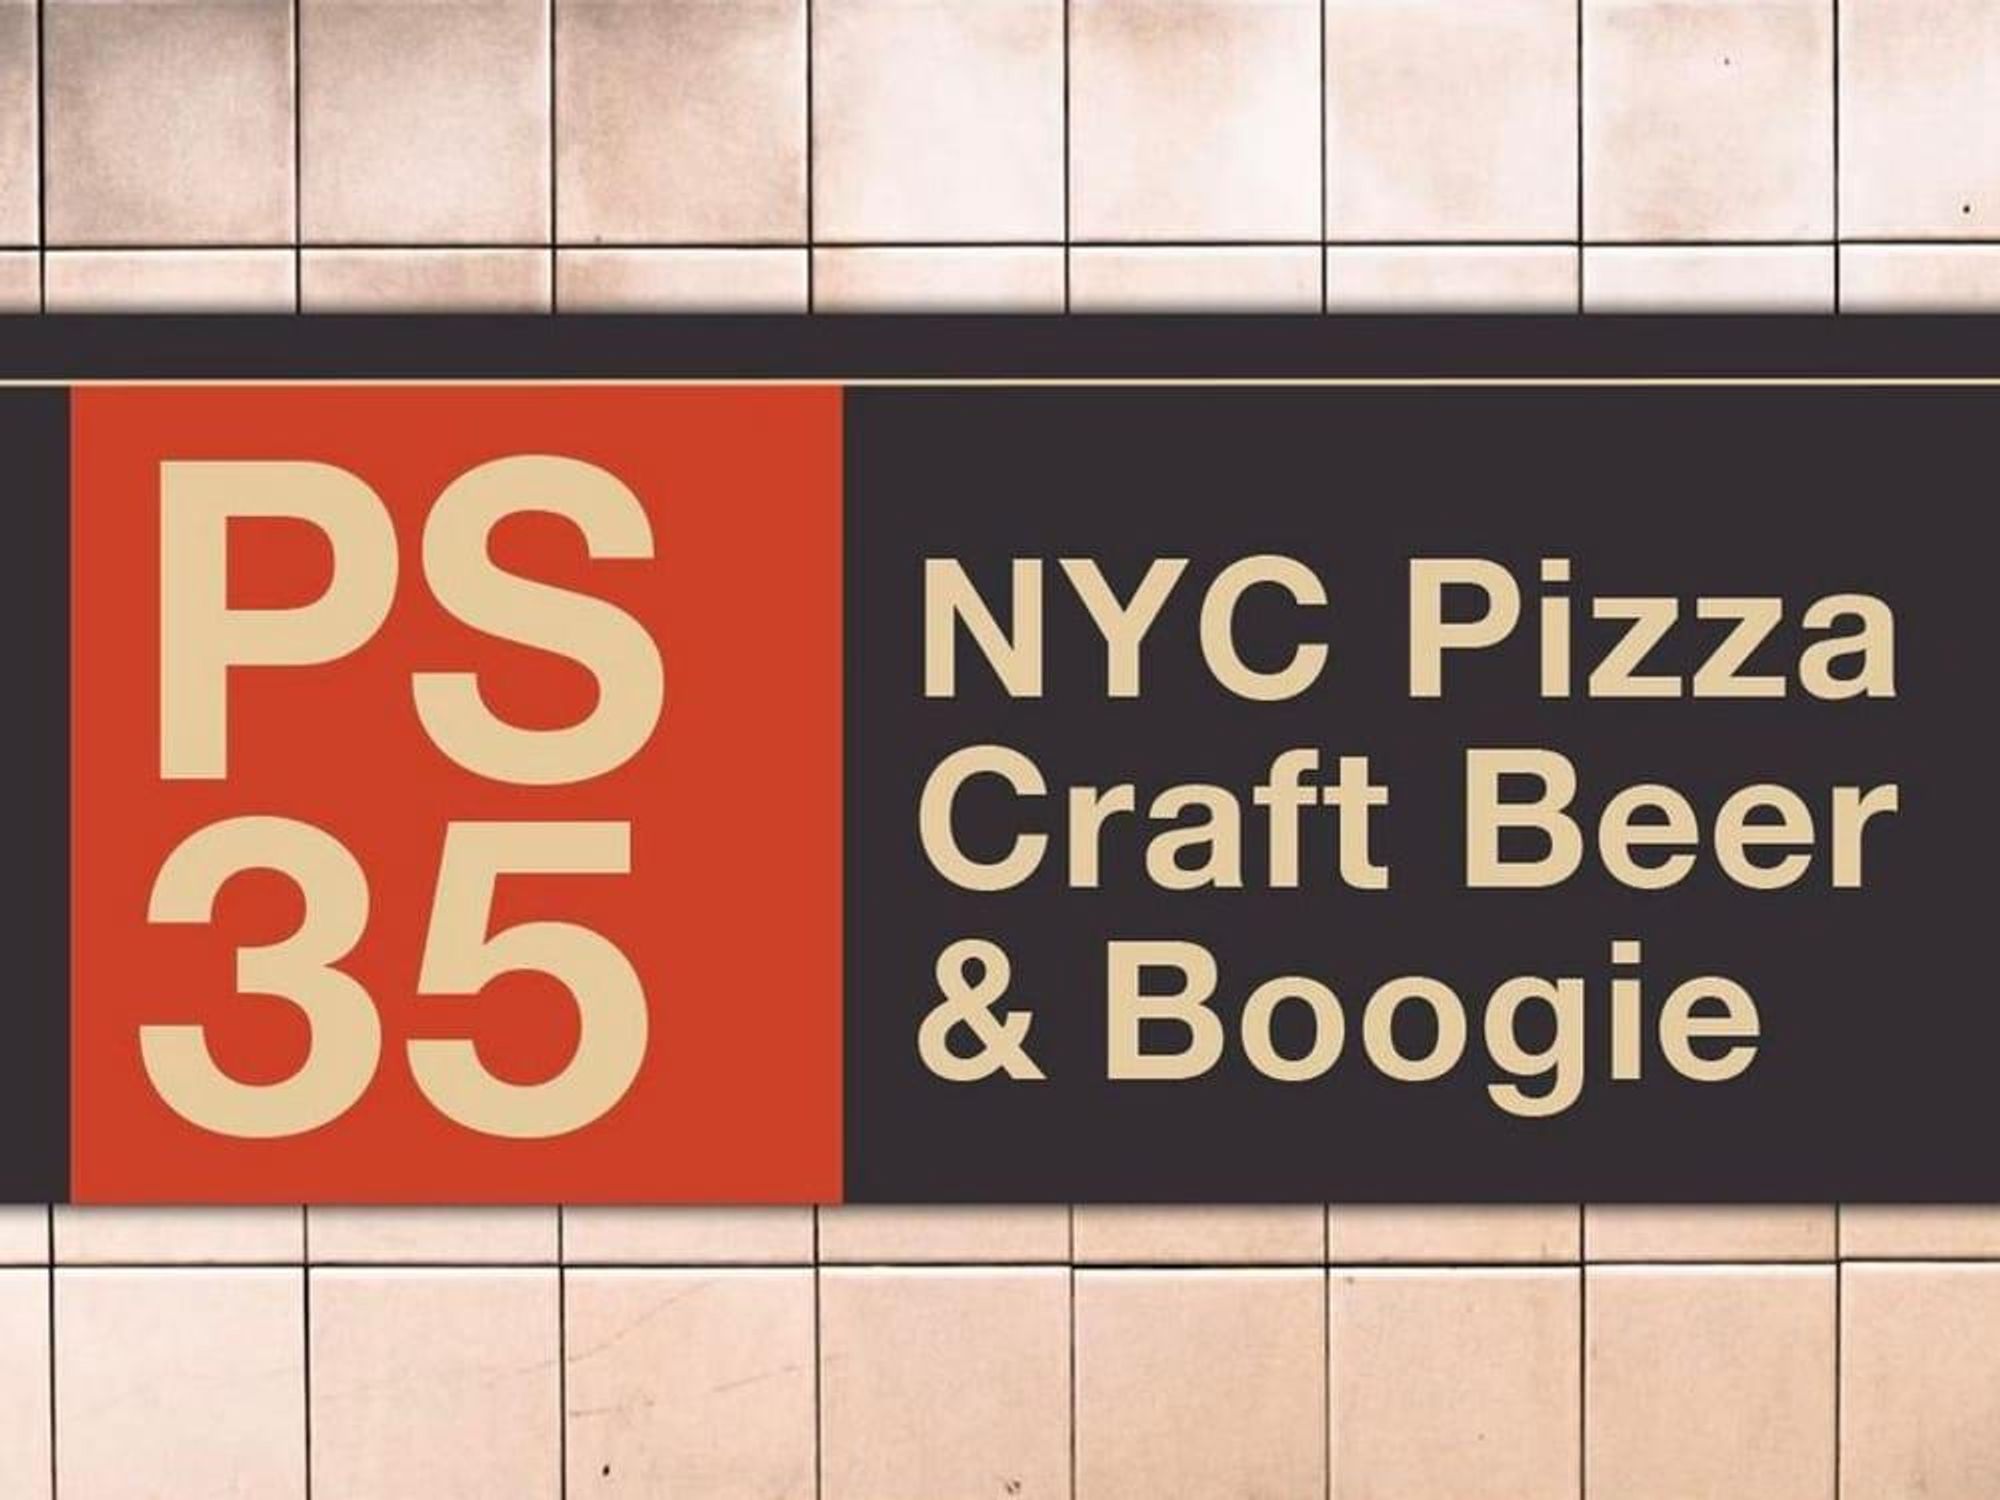 PS 35 pizza restaurant sign